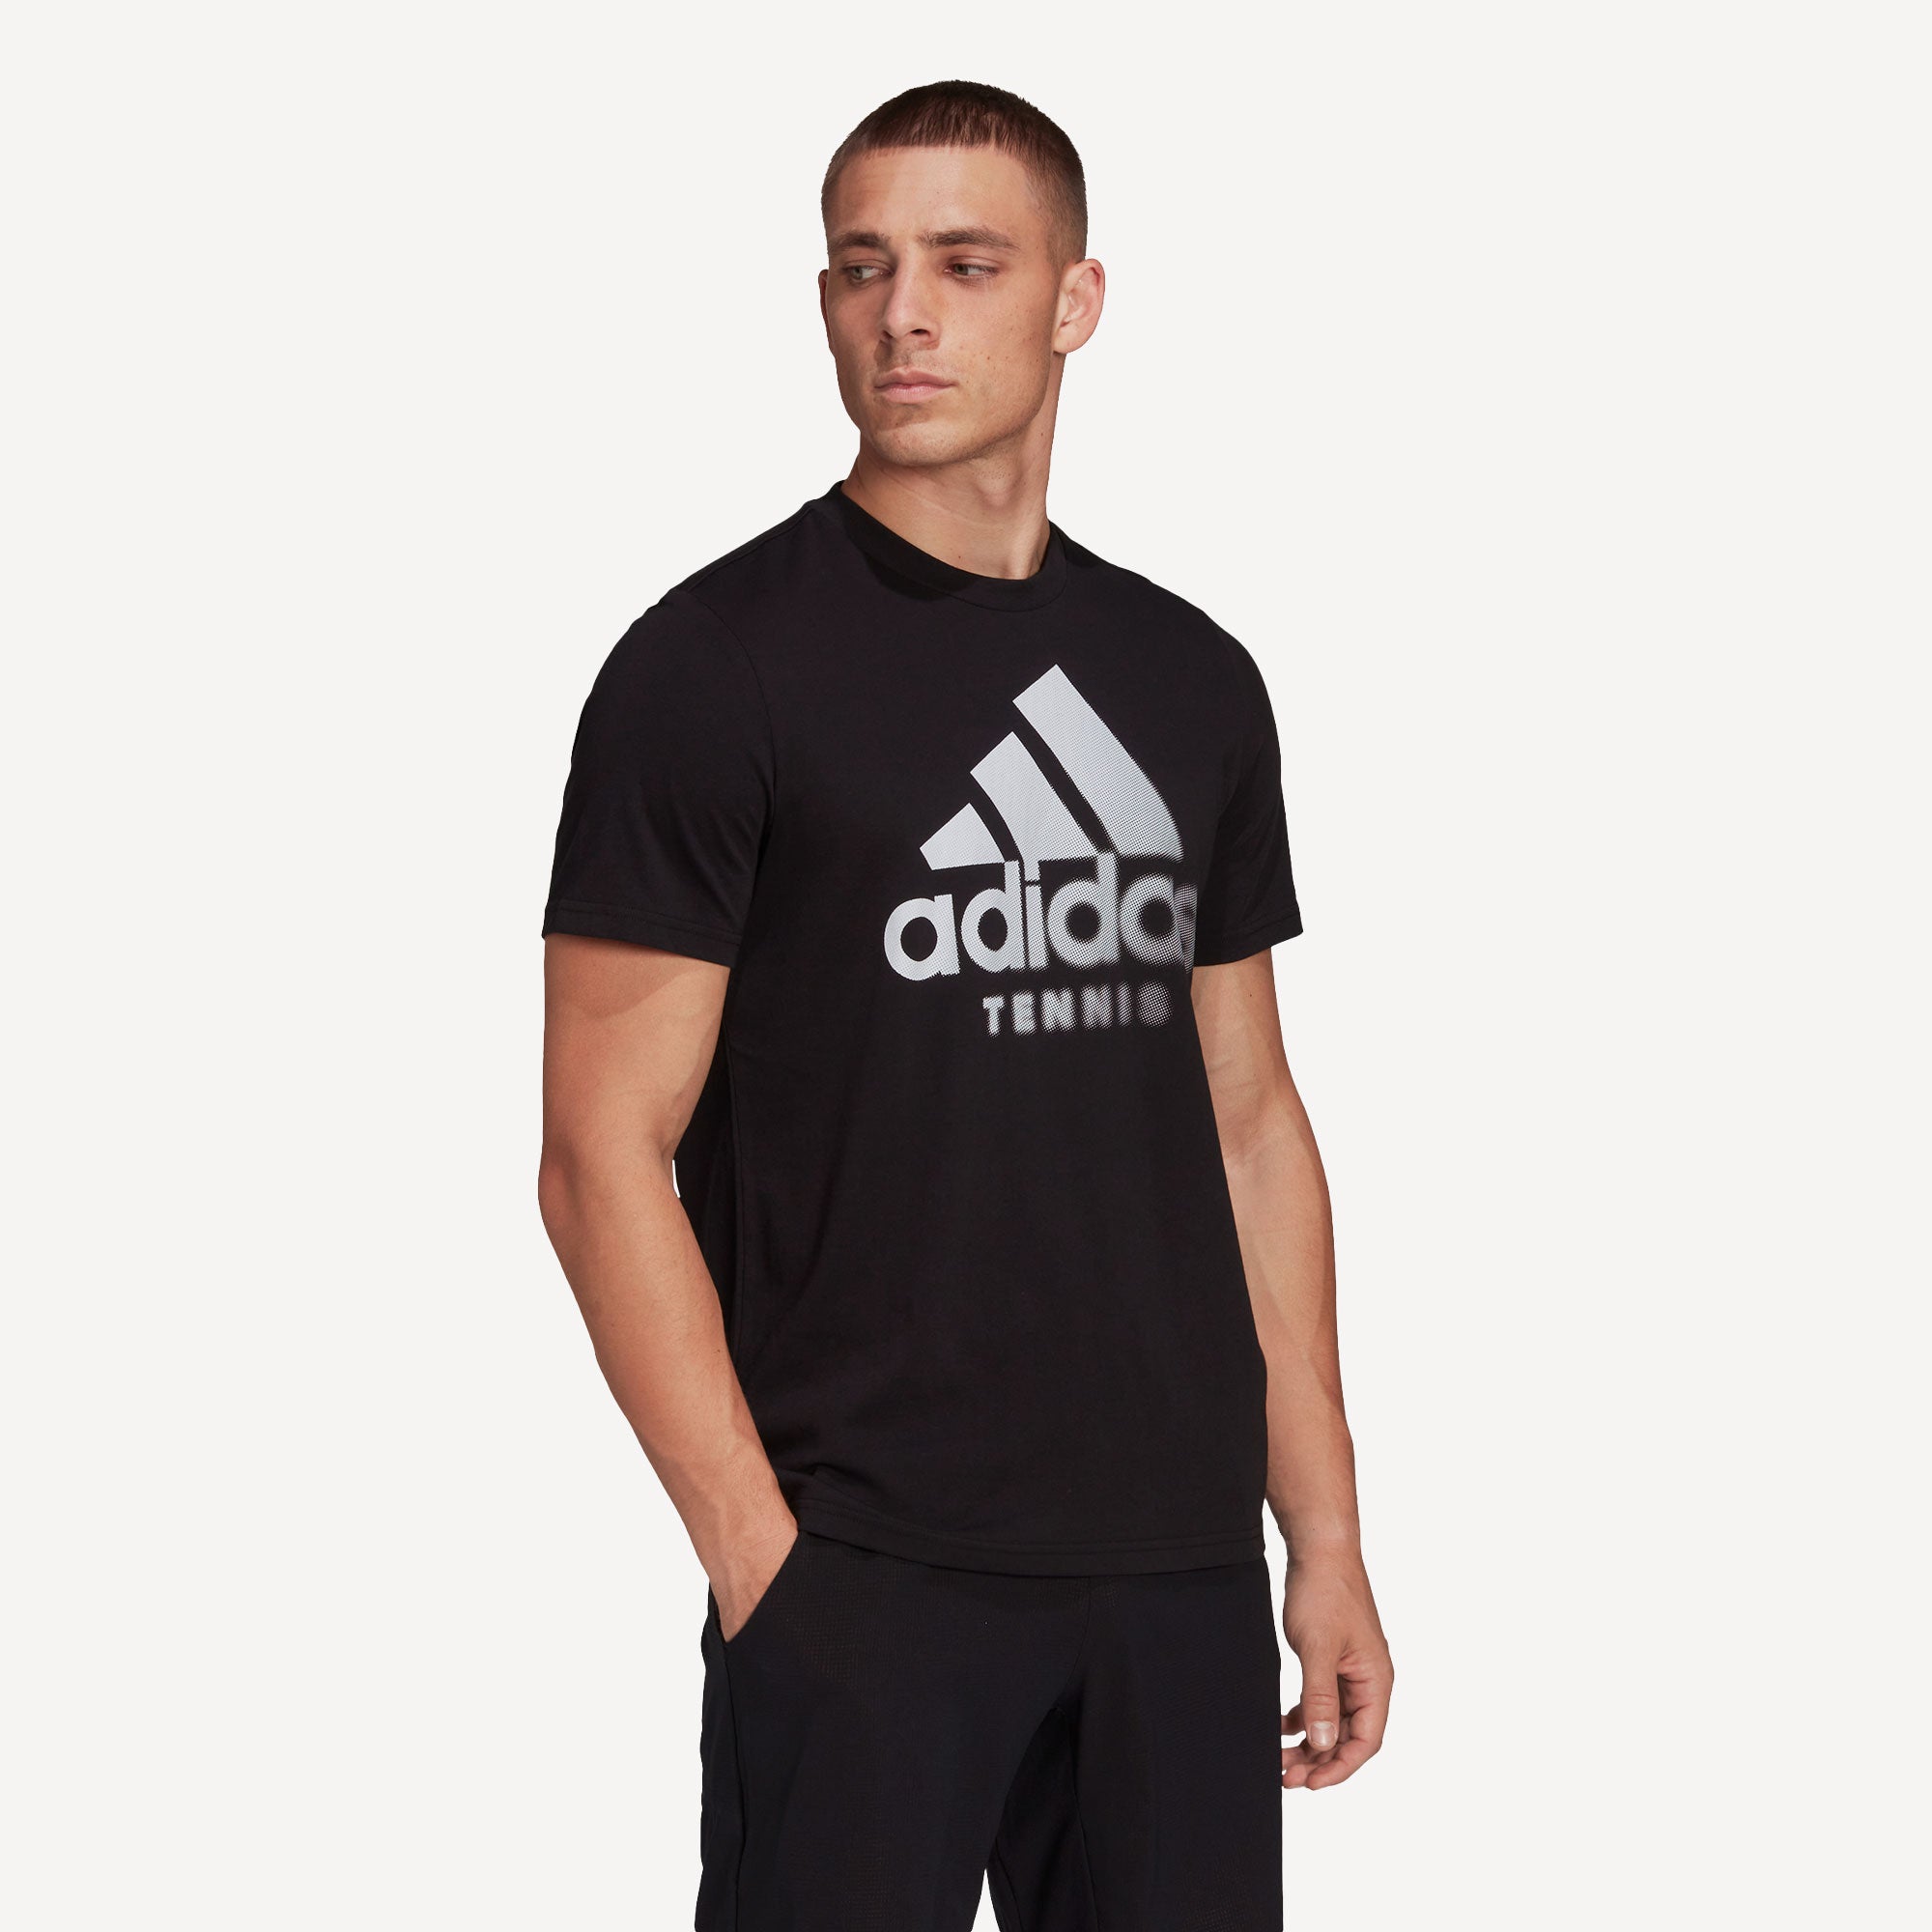 adidas Men's Graphic Tennis T-Shirt Black (3)